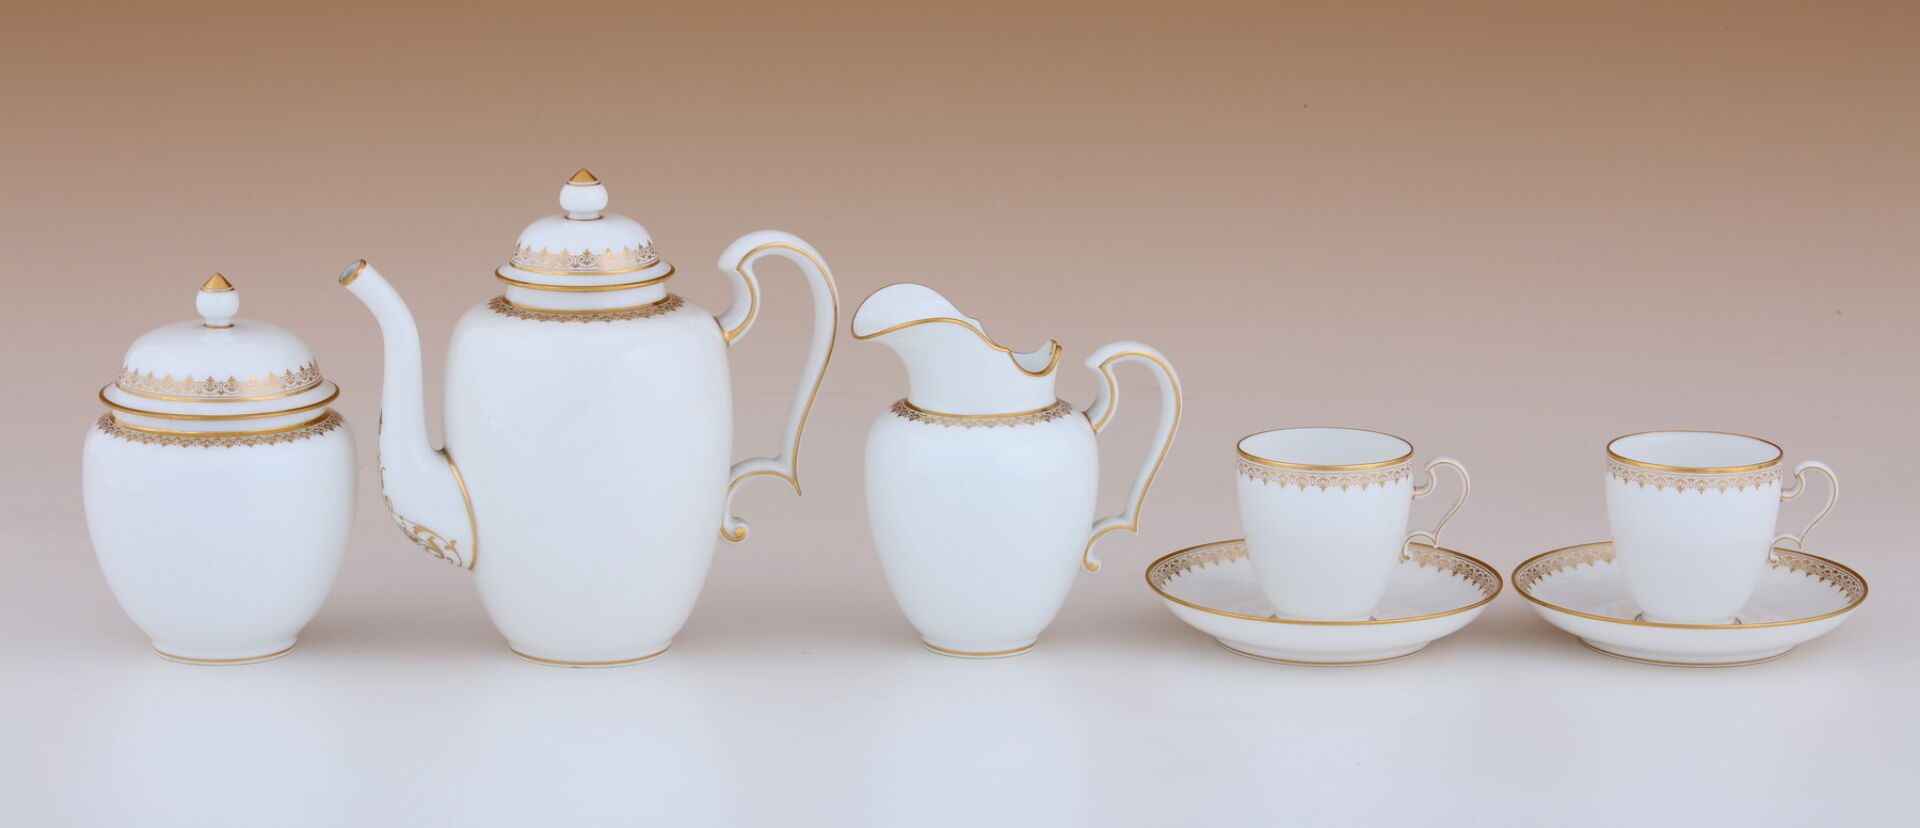 Null SEVRES 制造
头对头咖啡具 - 十九世纪下半叶
白瓷镀金装饰
包括 ：
- 咖啡壶（高 17.5 厘米）
- 有盖糖碗
- 牛奶壶
- 一对杯碟&hellip;